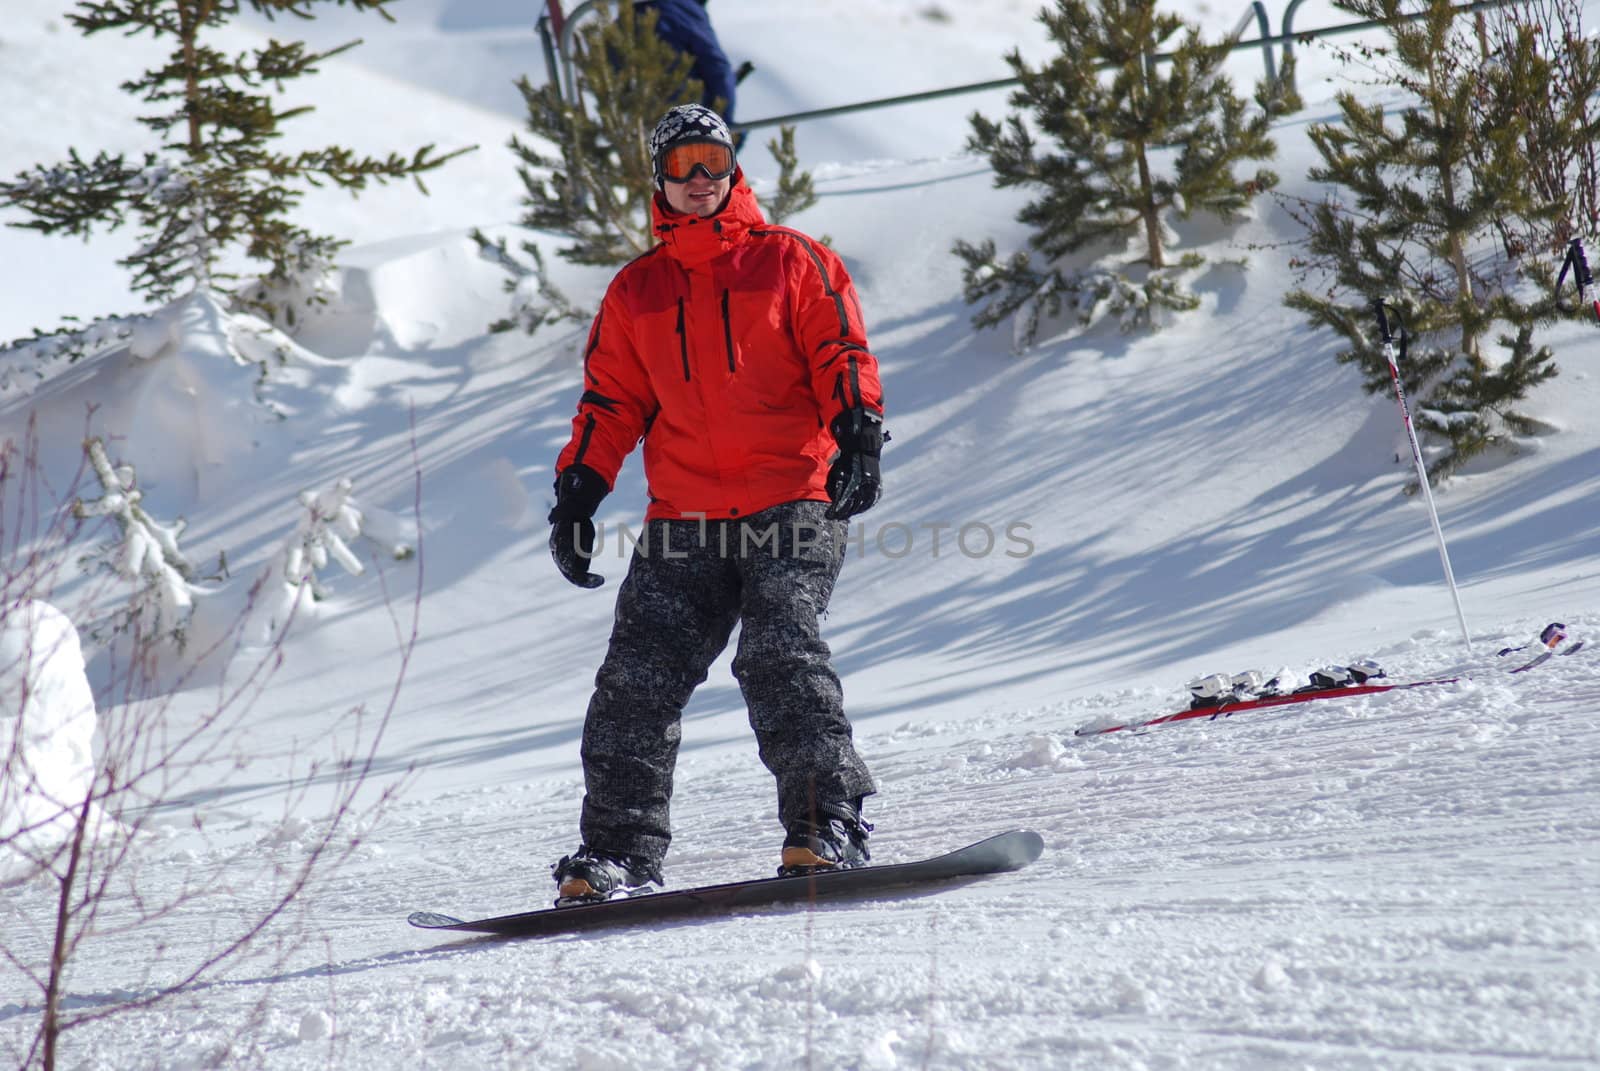 snowboarder by svtrotof